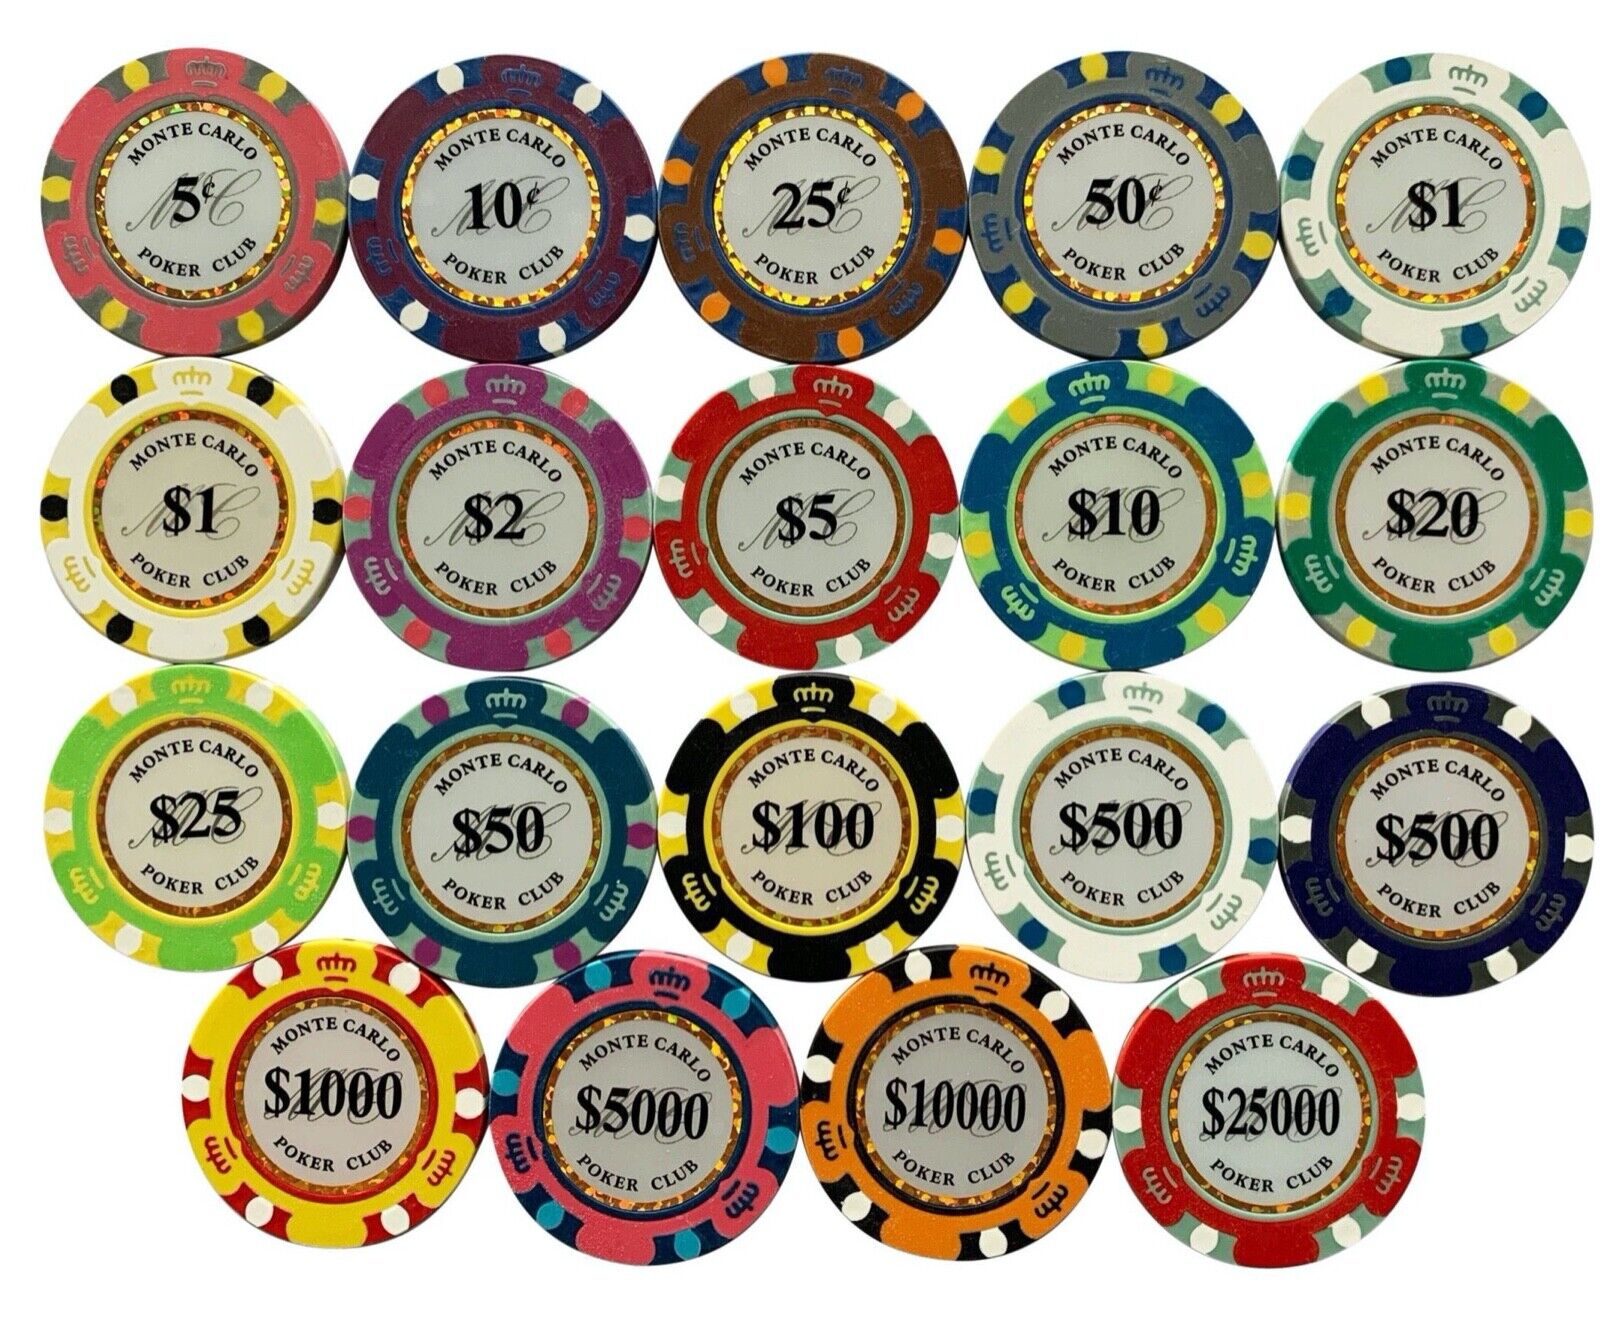 Monte Carlo Smooth 14 Gram Poker Chips MEGA 20 Chips Sample Set Pack - NEW 